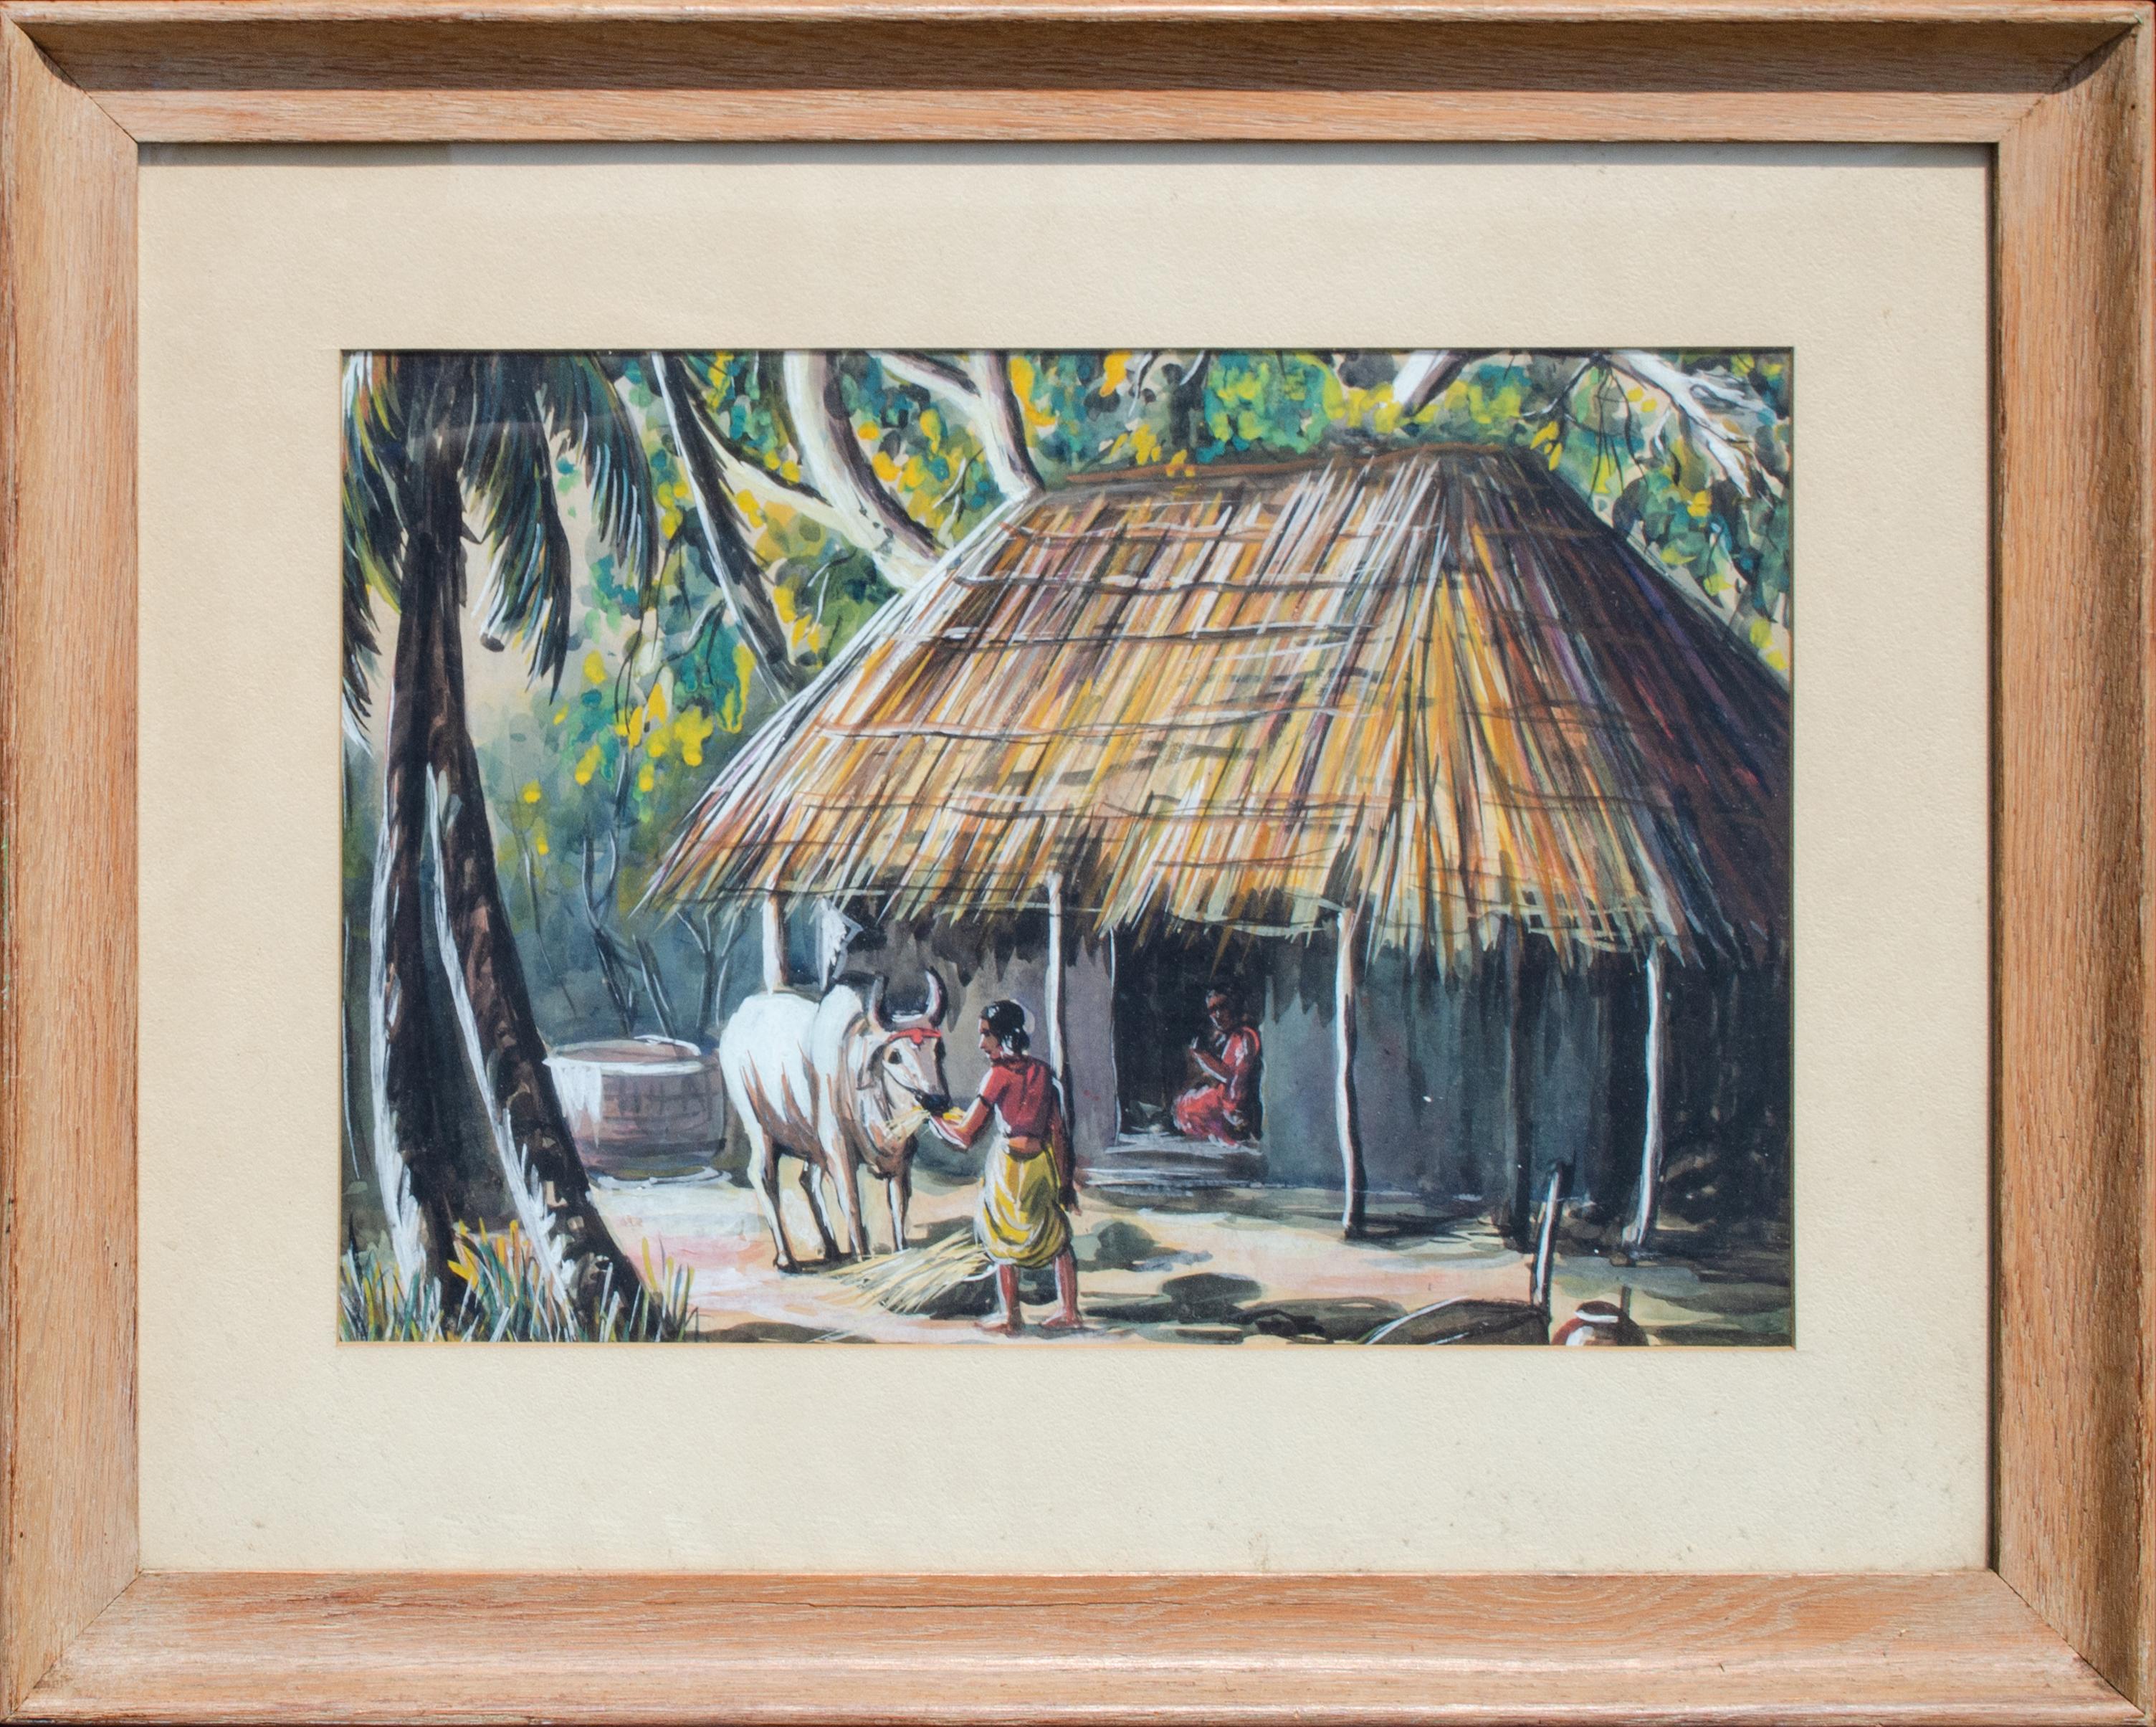 Unknown Landscape Print - Indian Folk Art Print of a Jungle Dwelling